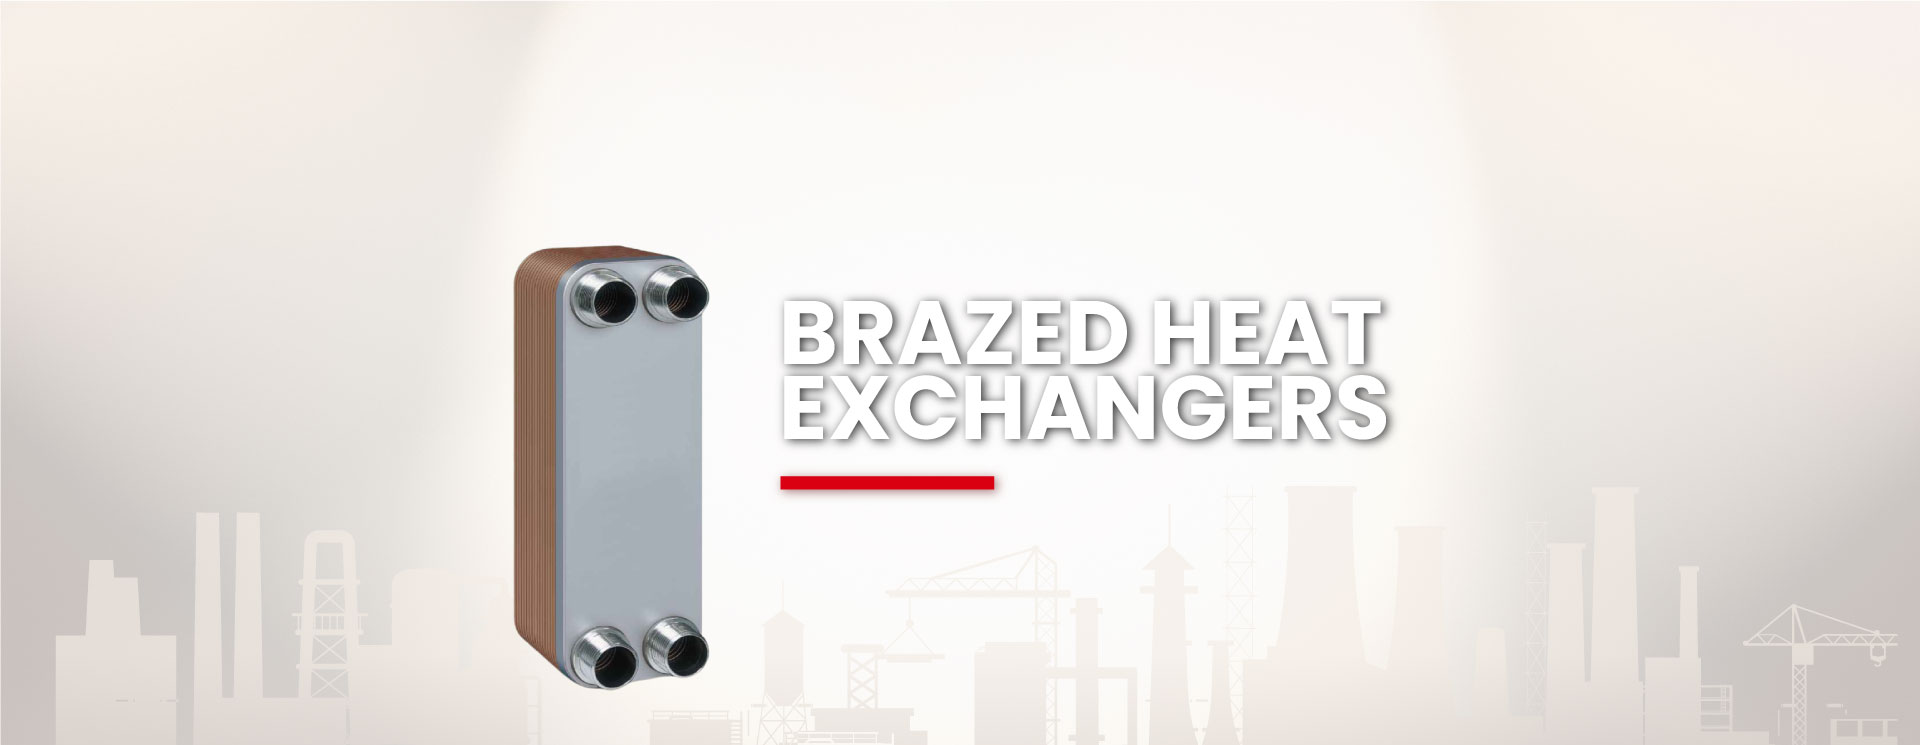 Hisaka Brazed Plate Heat Exchangers